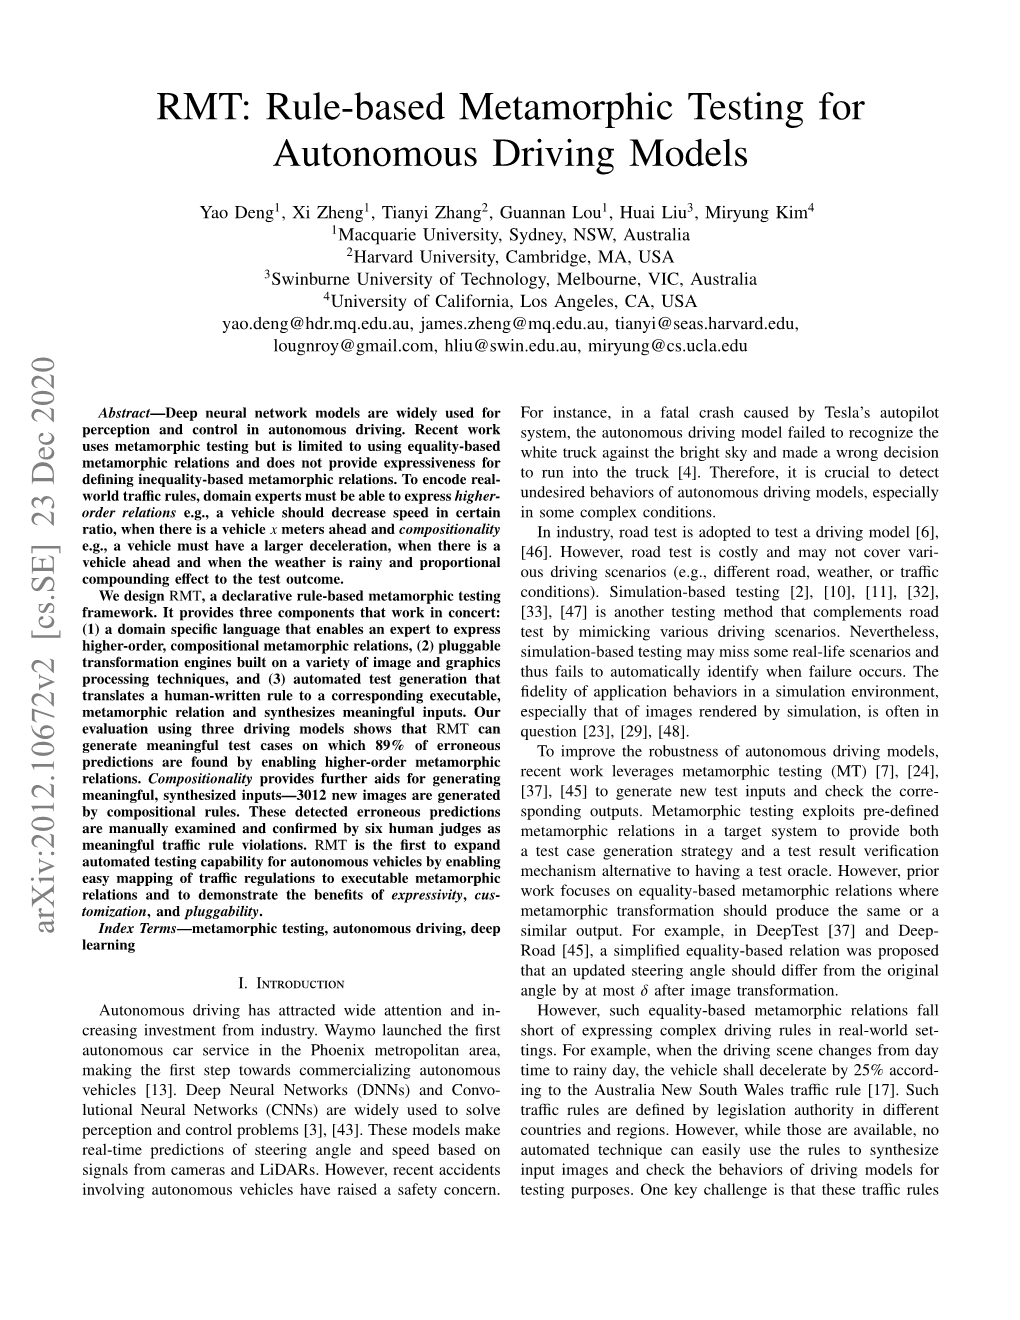 Rule-Based Metamorphic Testing for Autonomous Driving Models